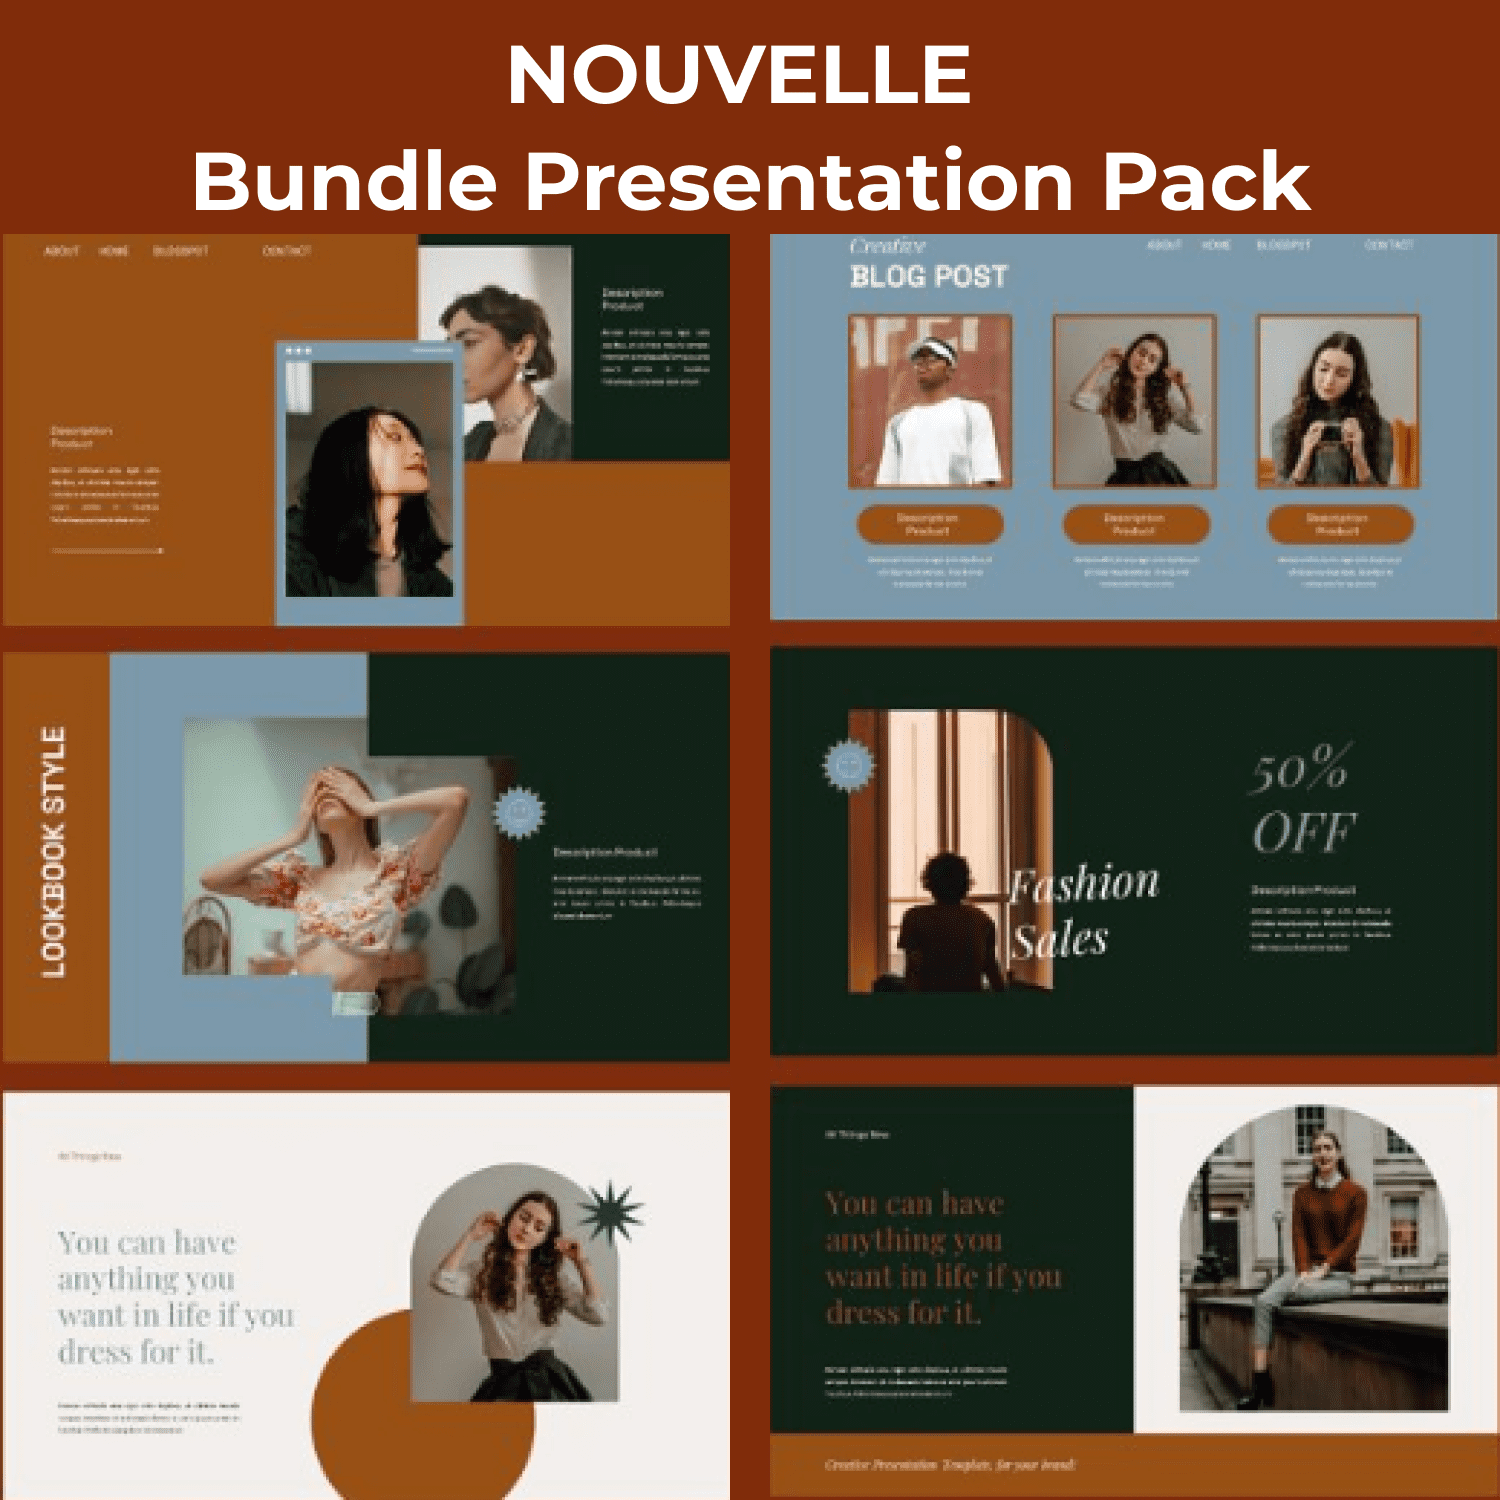 NOUVELLE Bundle Presentation Pack cover image.